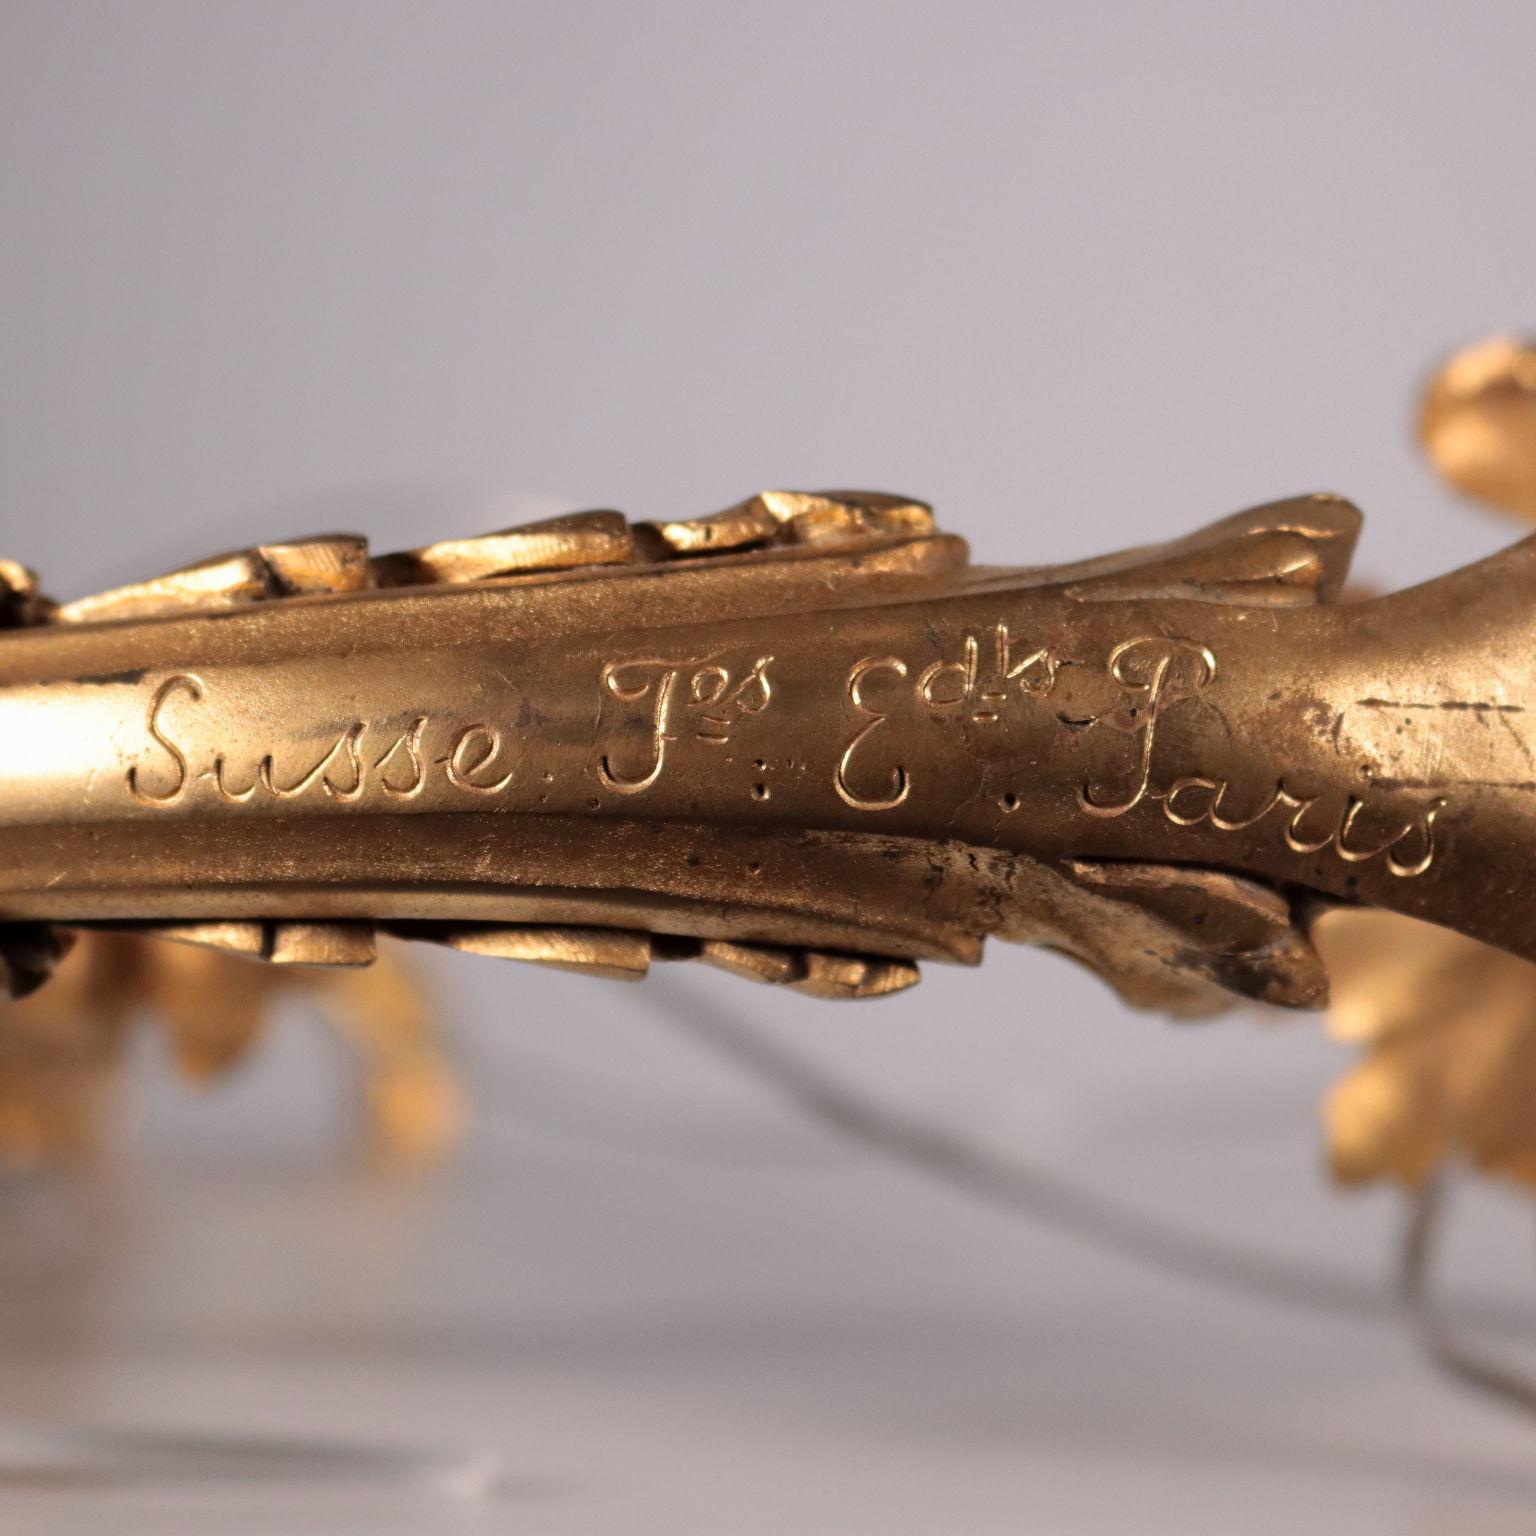 Chandelier “O. Lelièvre Sclp”, “Susse Fres Edts” Gilded Bronze For Sale 3